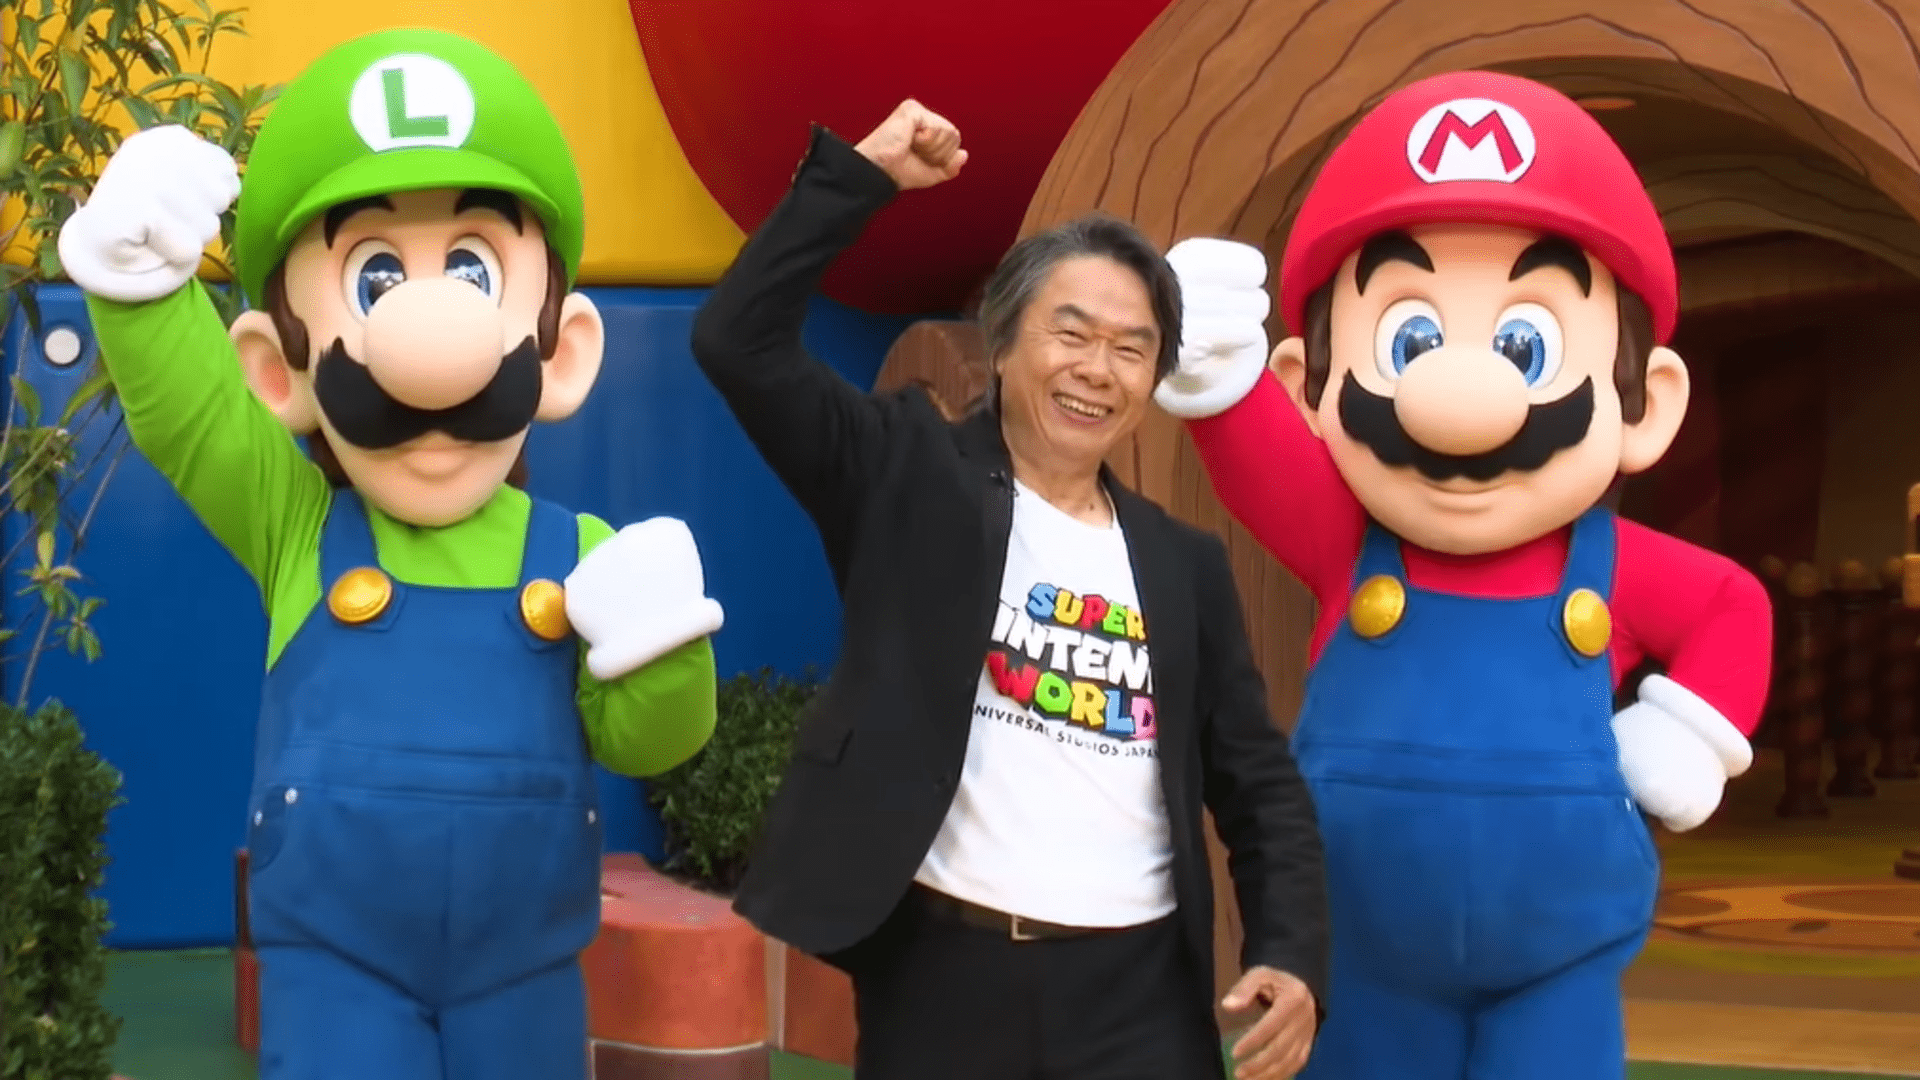 Don't Compare Him To Disney: Nintendo's Shigeru Miyamoto on The Super Mario  Bros. Movie